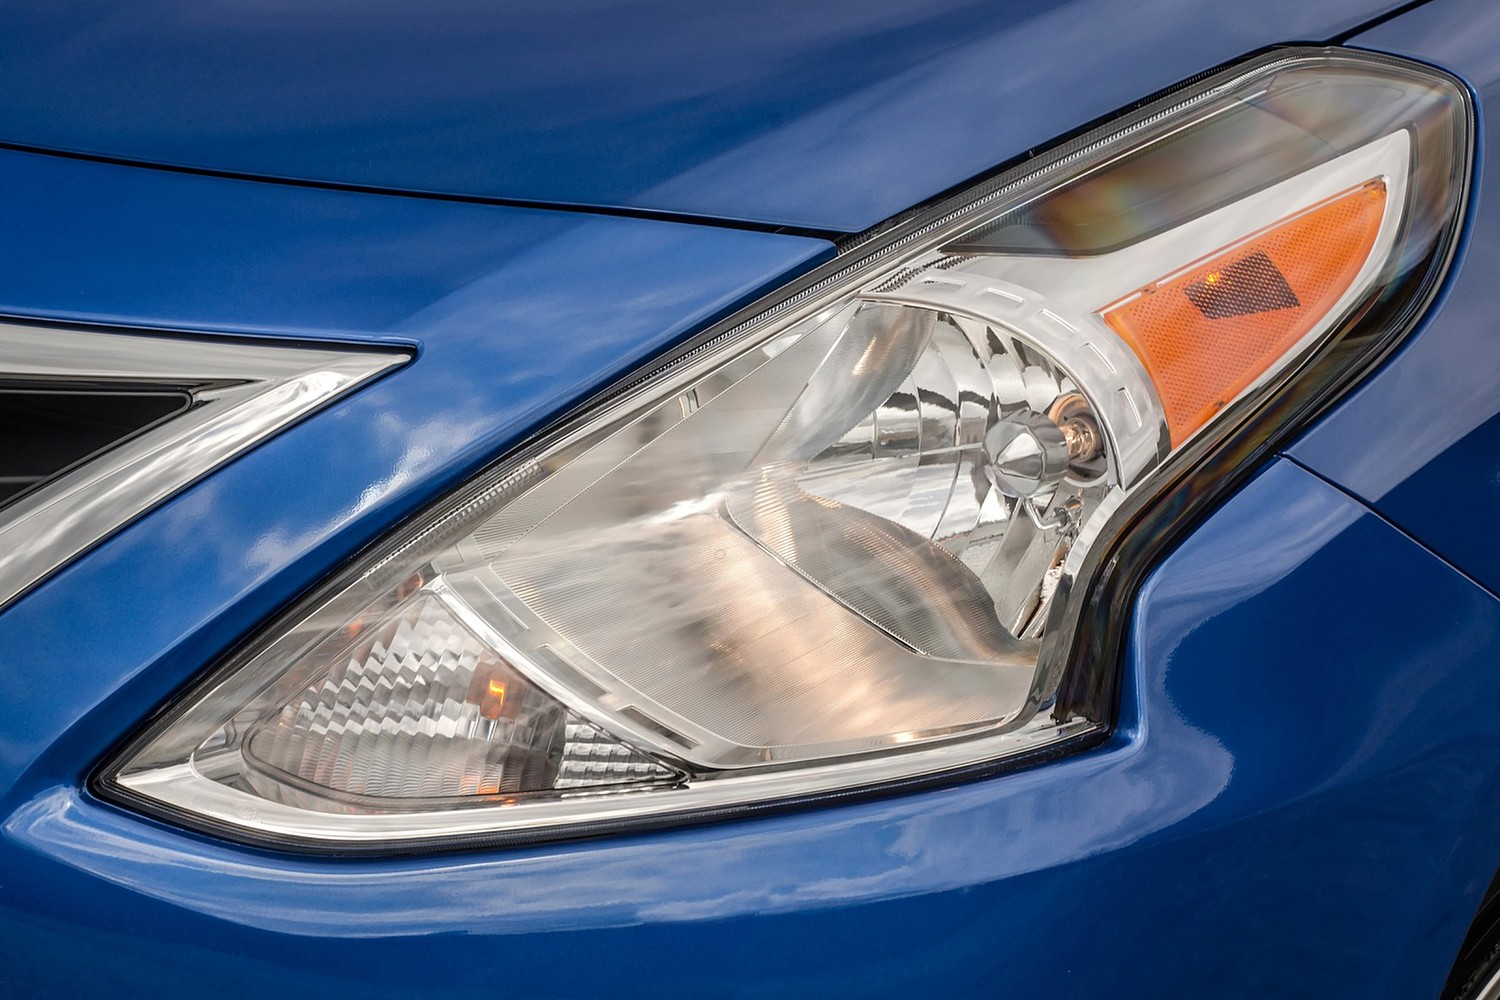 Nissan Versa 1.6 SL Sedan Headlamp Detail (2015 model year shown)